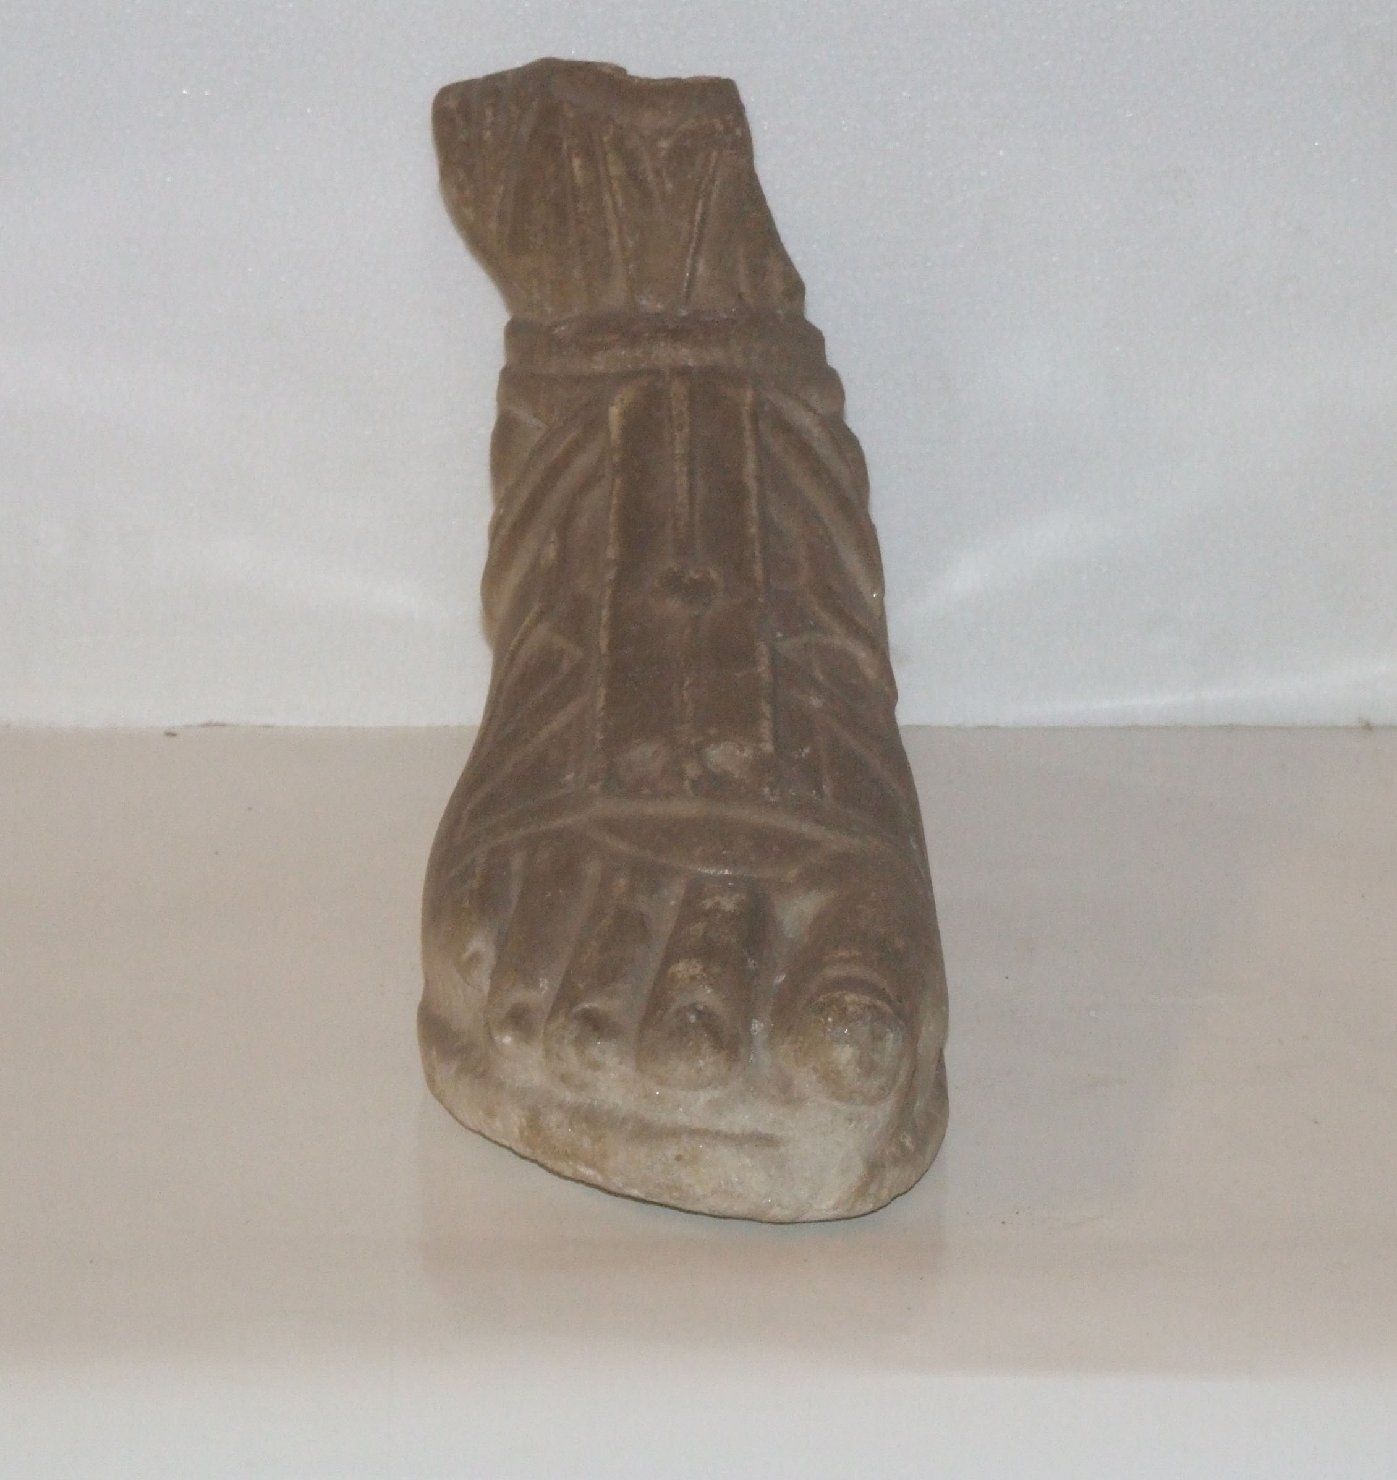 Figura maschile ignota (piede) (statua, frammento) - arte romana (secc. I/ II)